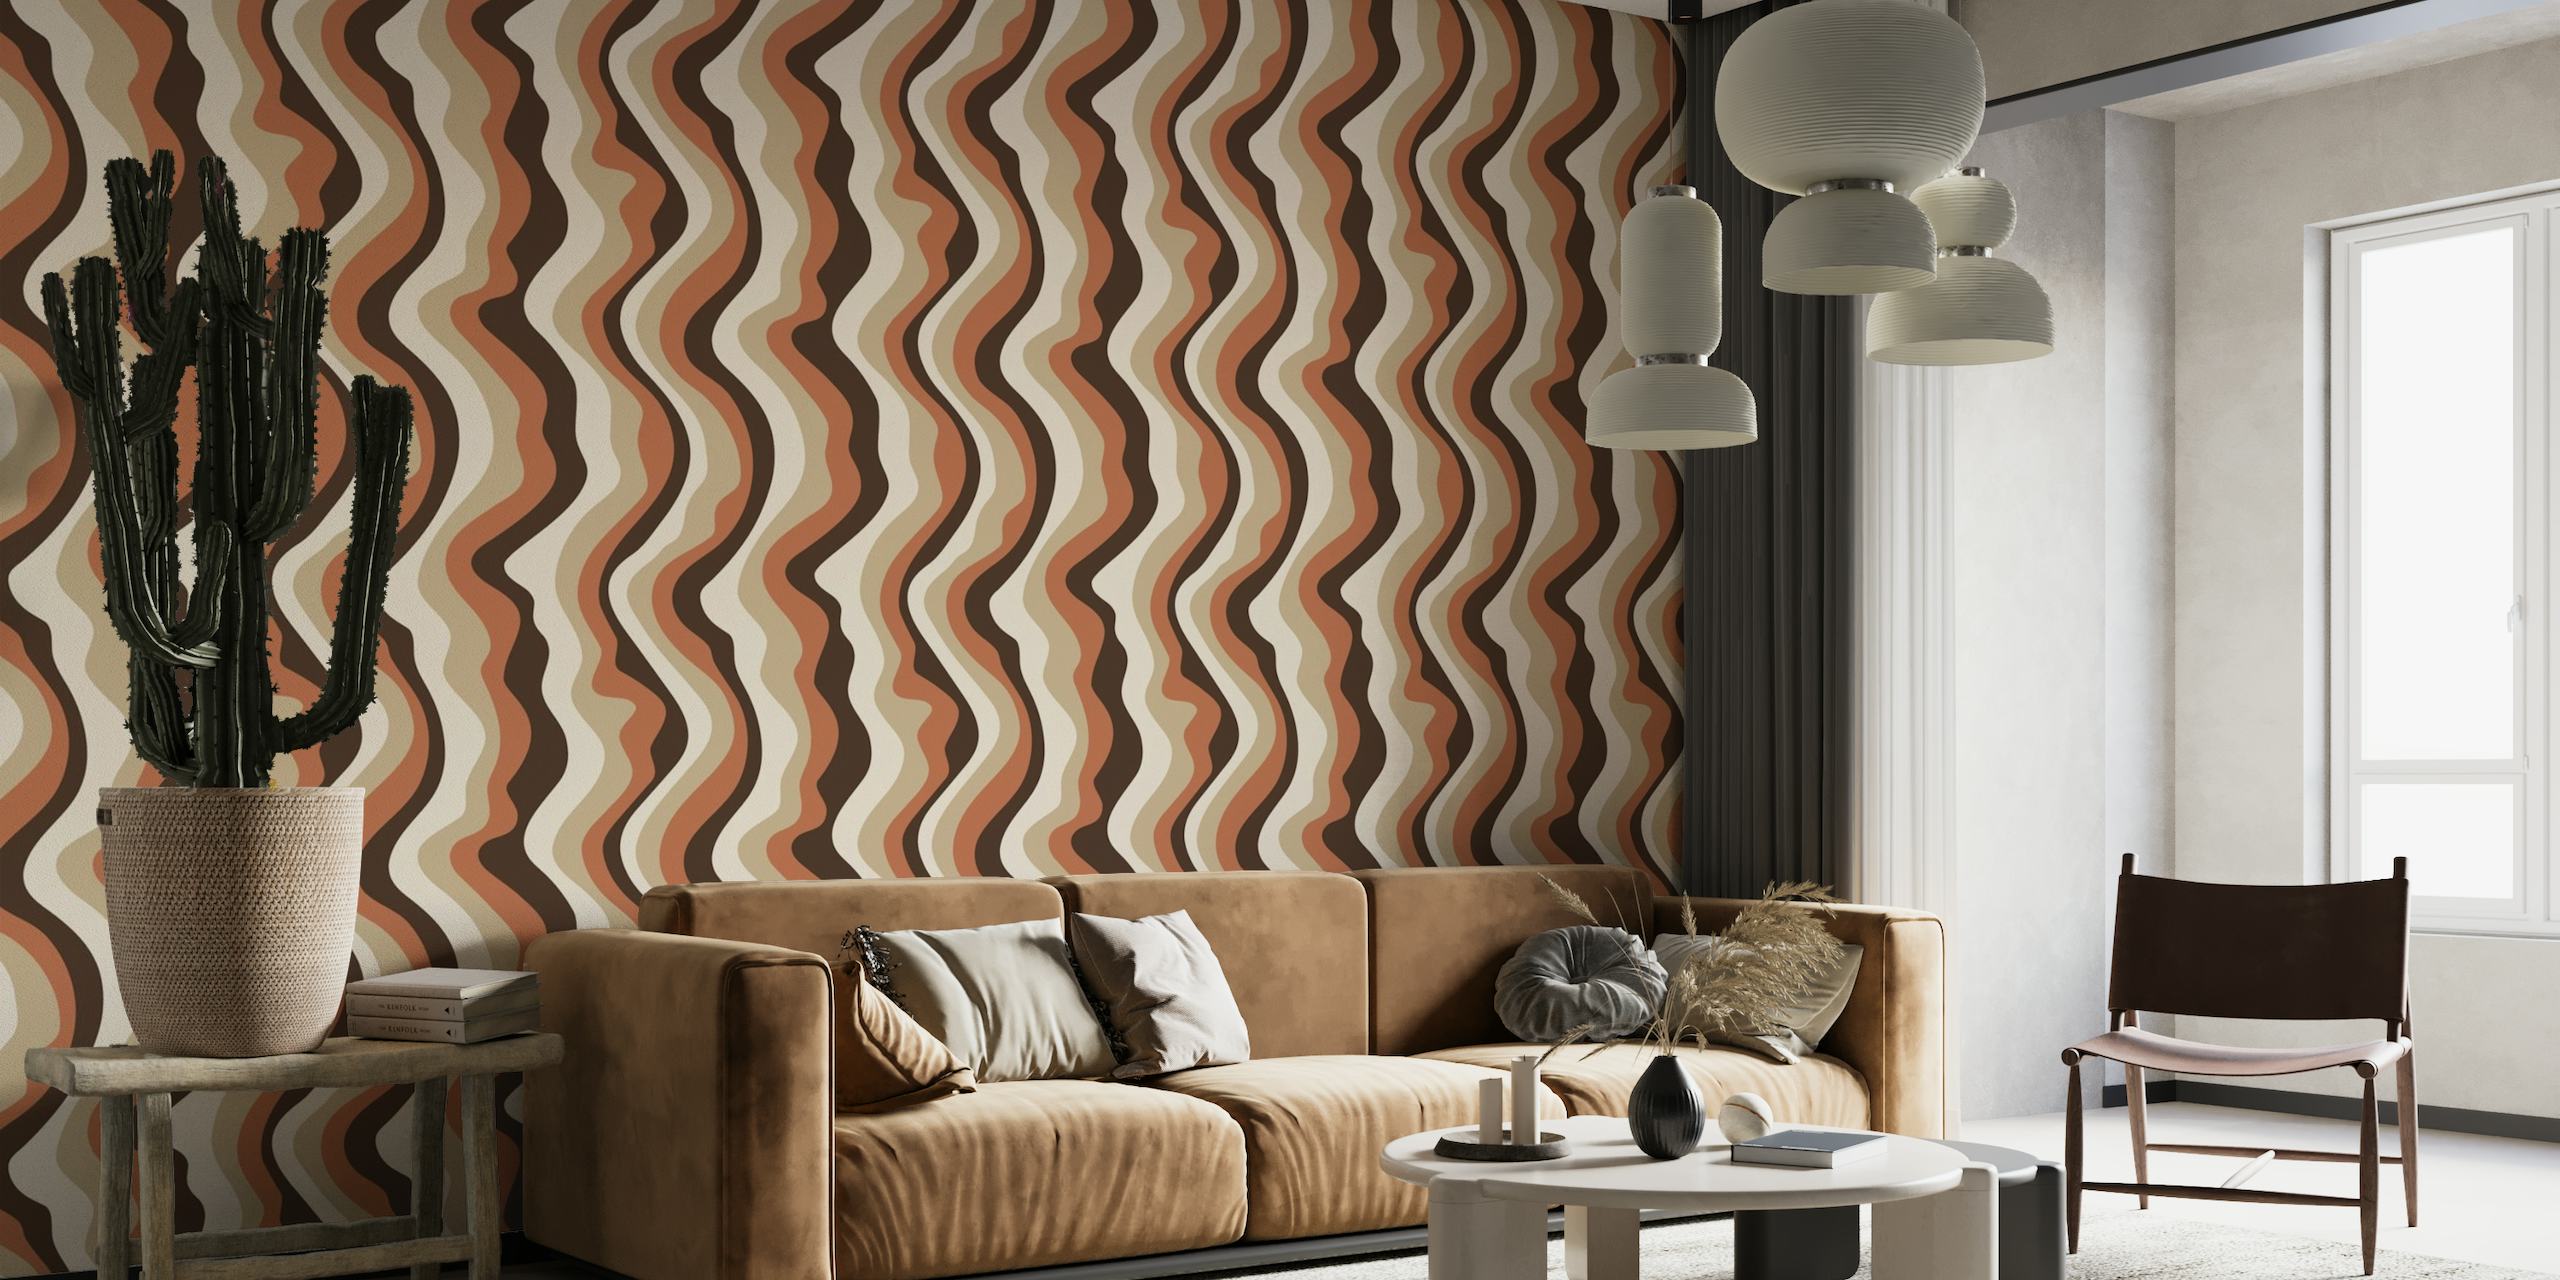 GOOD VIBRATIONS Mod Wavy Stripes Brown Beige wallpaper